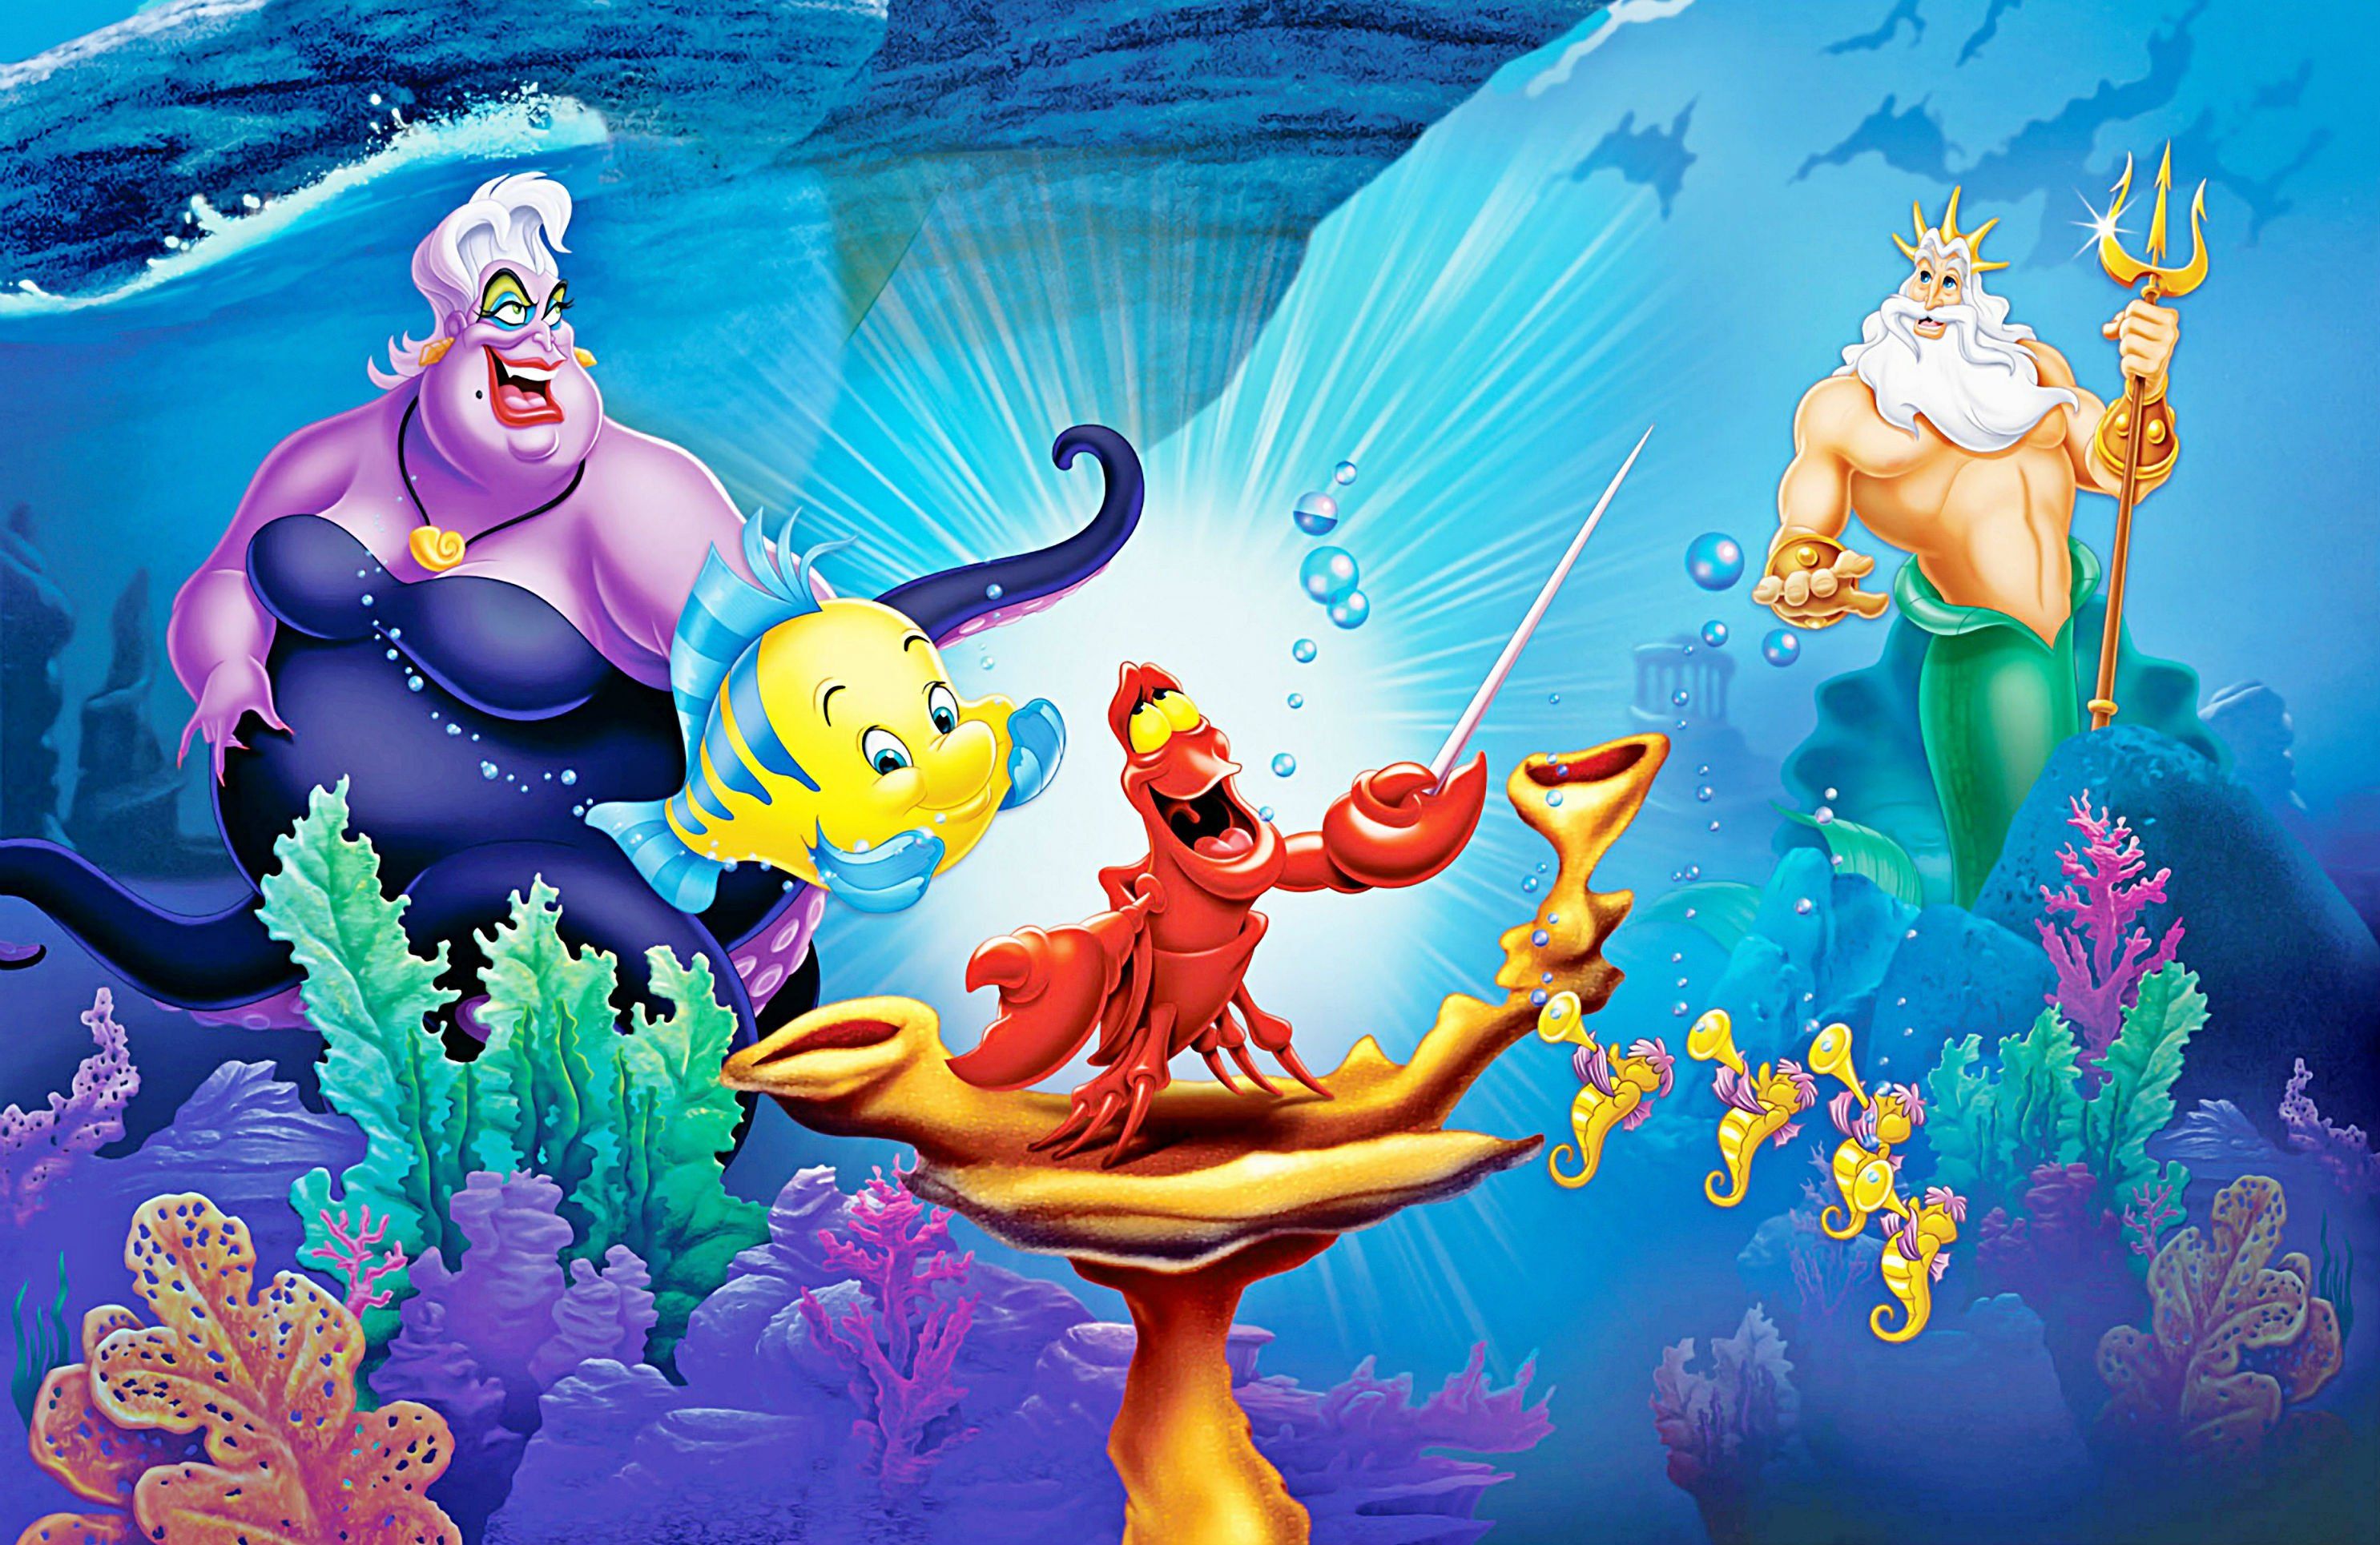 LITTLE MERMAID disney fantasy animation cartoon adventure family 1littlemermaid ariel princess ocean sea underwater wallpaperx1929